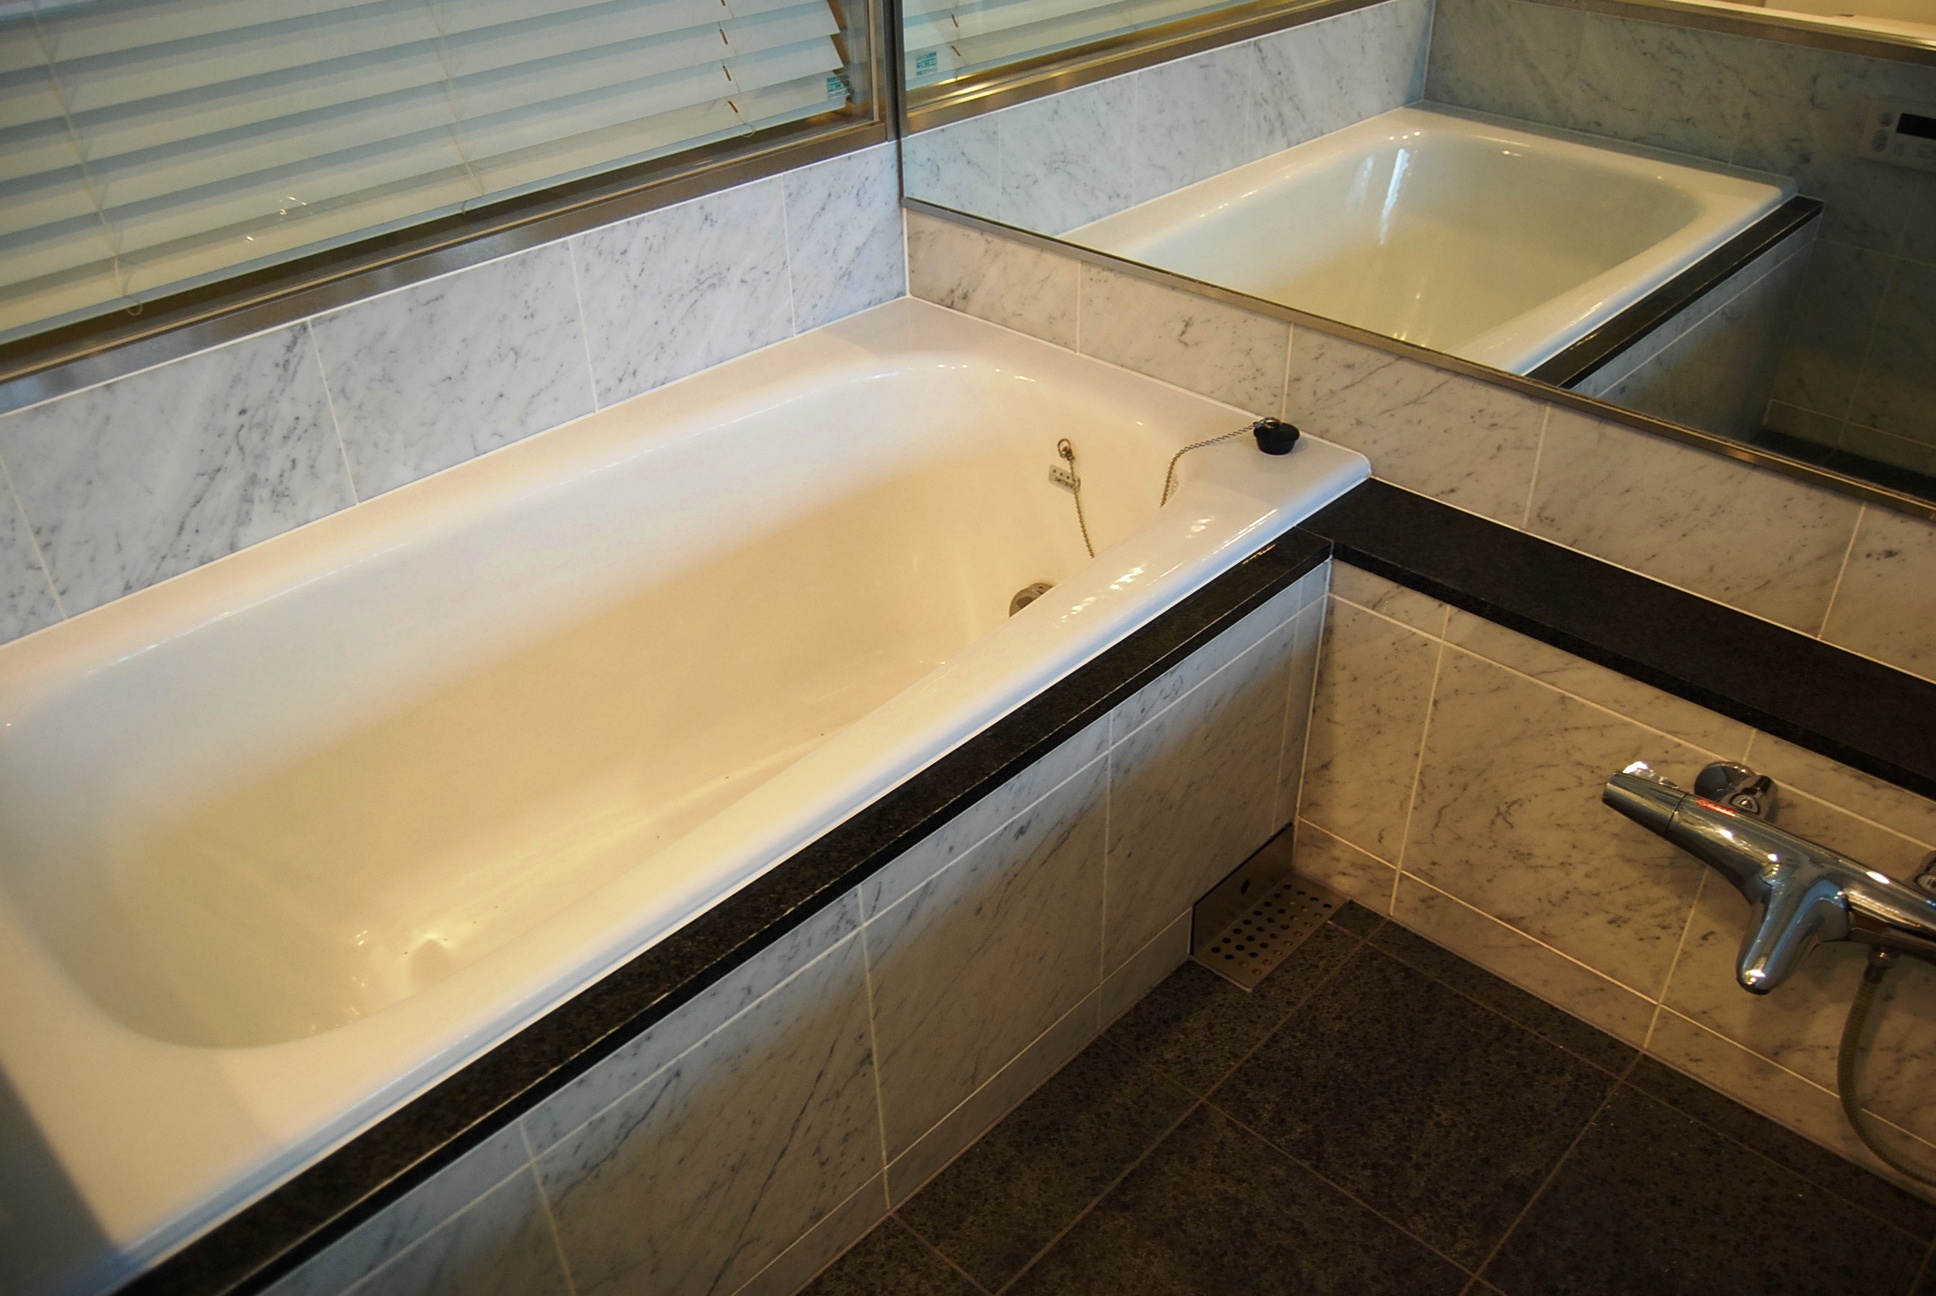 Bath. Bathroom of marble is full of luxury